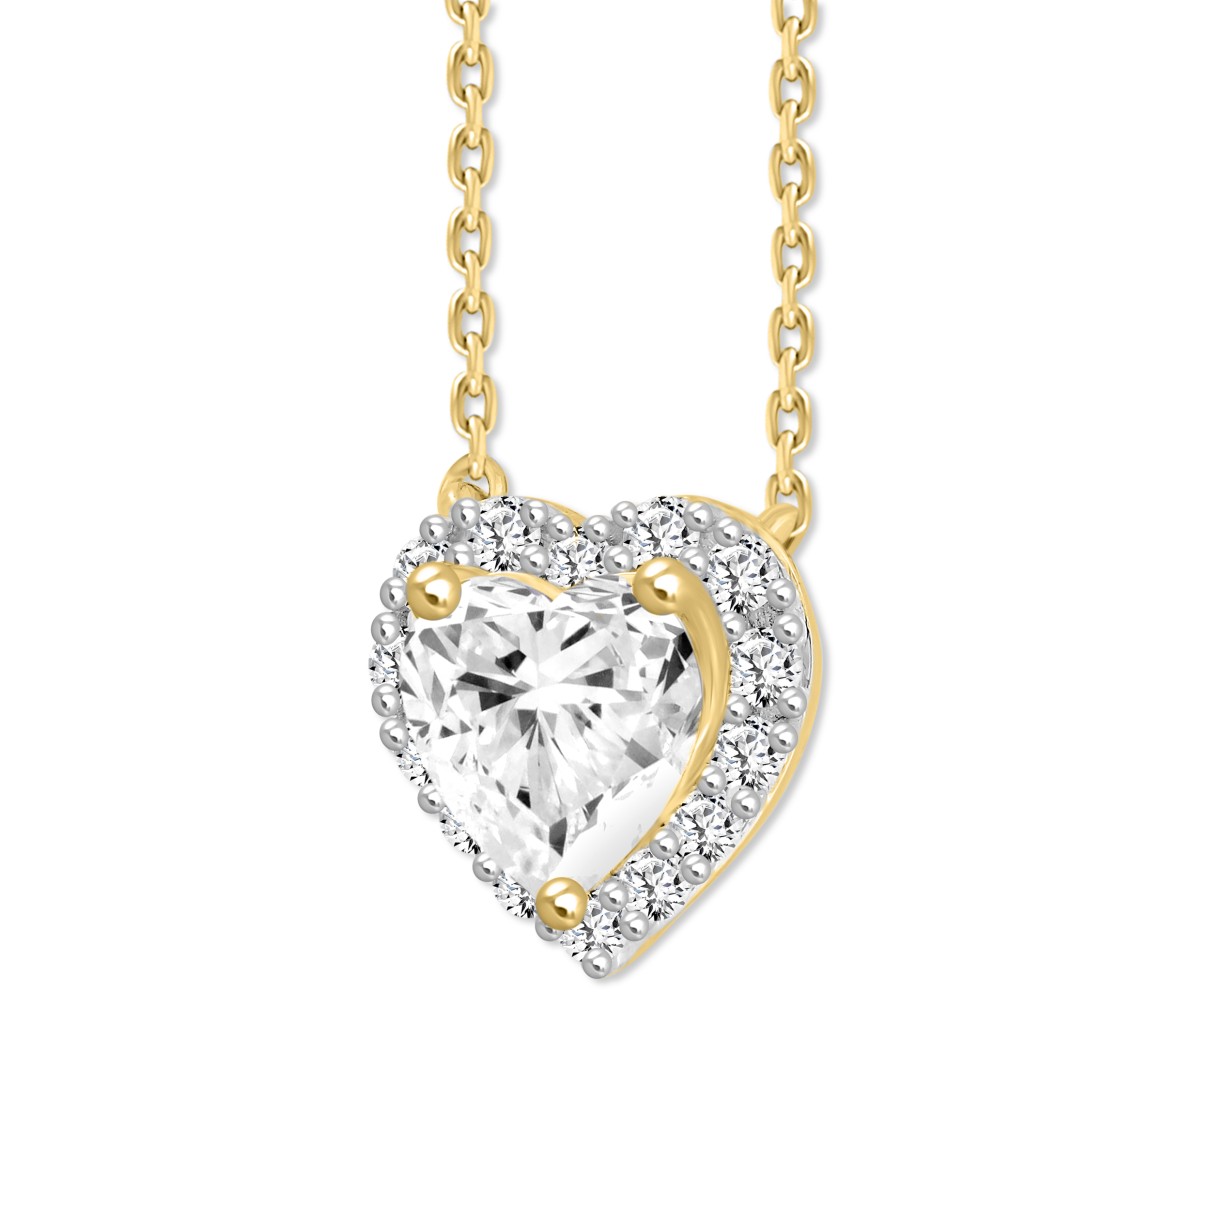 LADIES NECKLACE 1 1/4CT ROUND DIAMOND 14K YELLOW GOLD (CENTER STONE HEART DIAMOND 1CT)